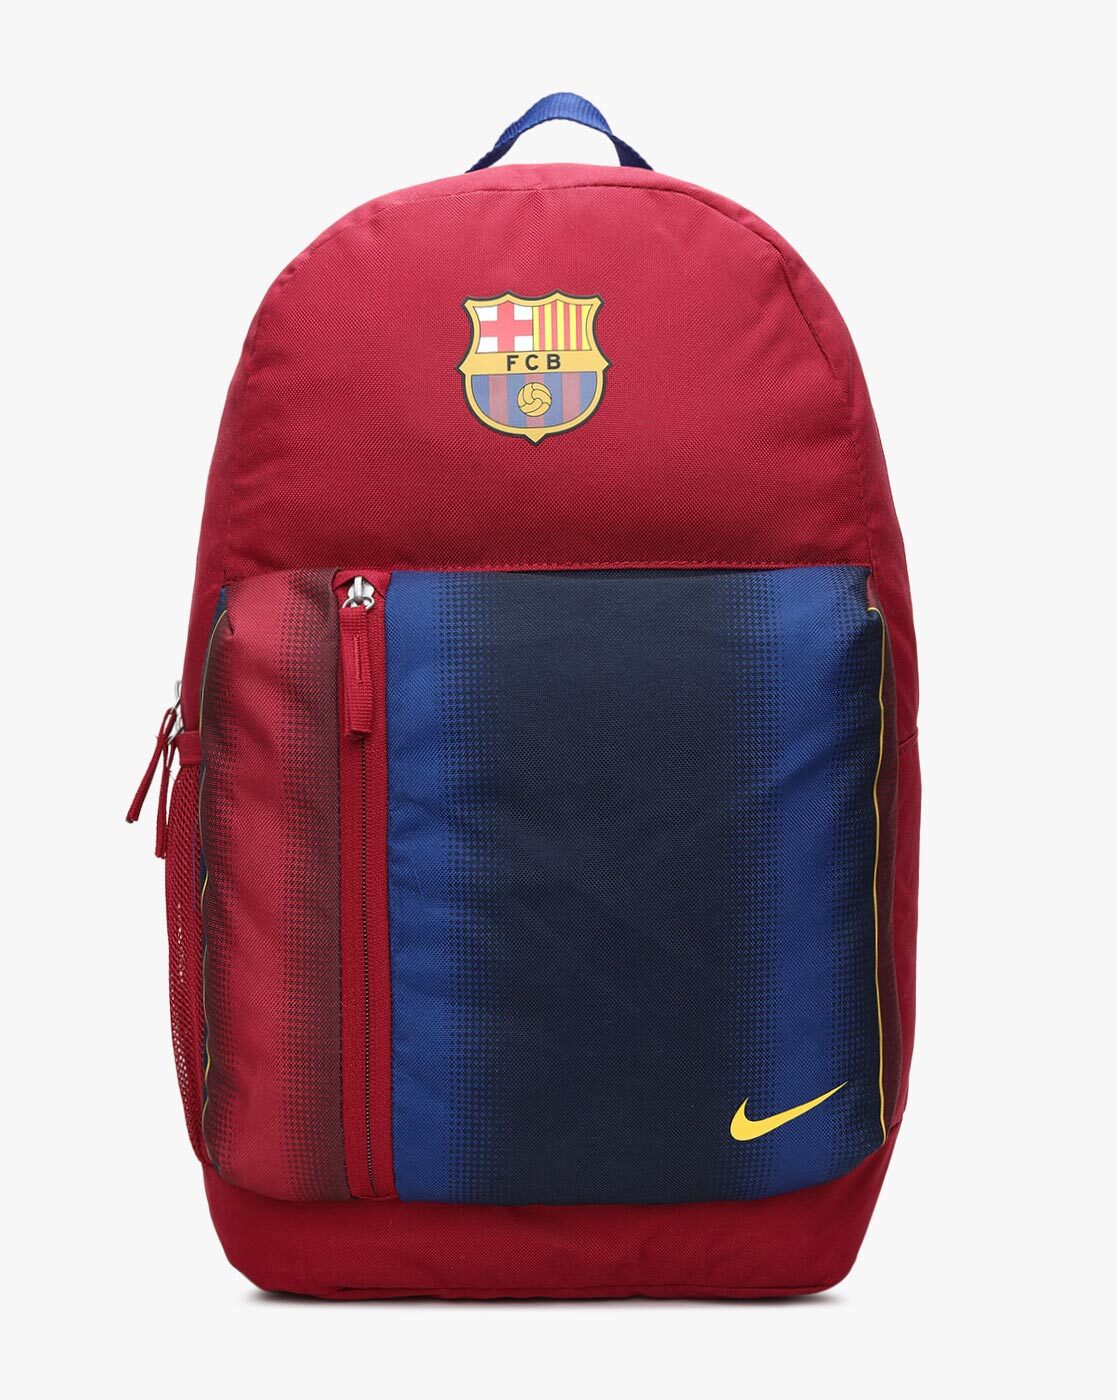 Backpack Black Barça Nike  Barça Official Store Spotify Camp Nou